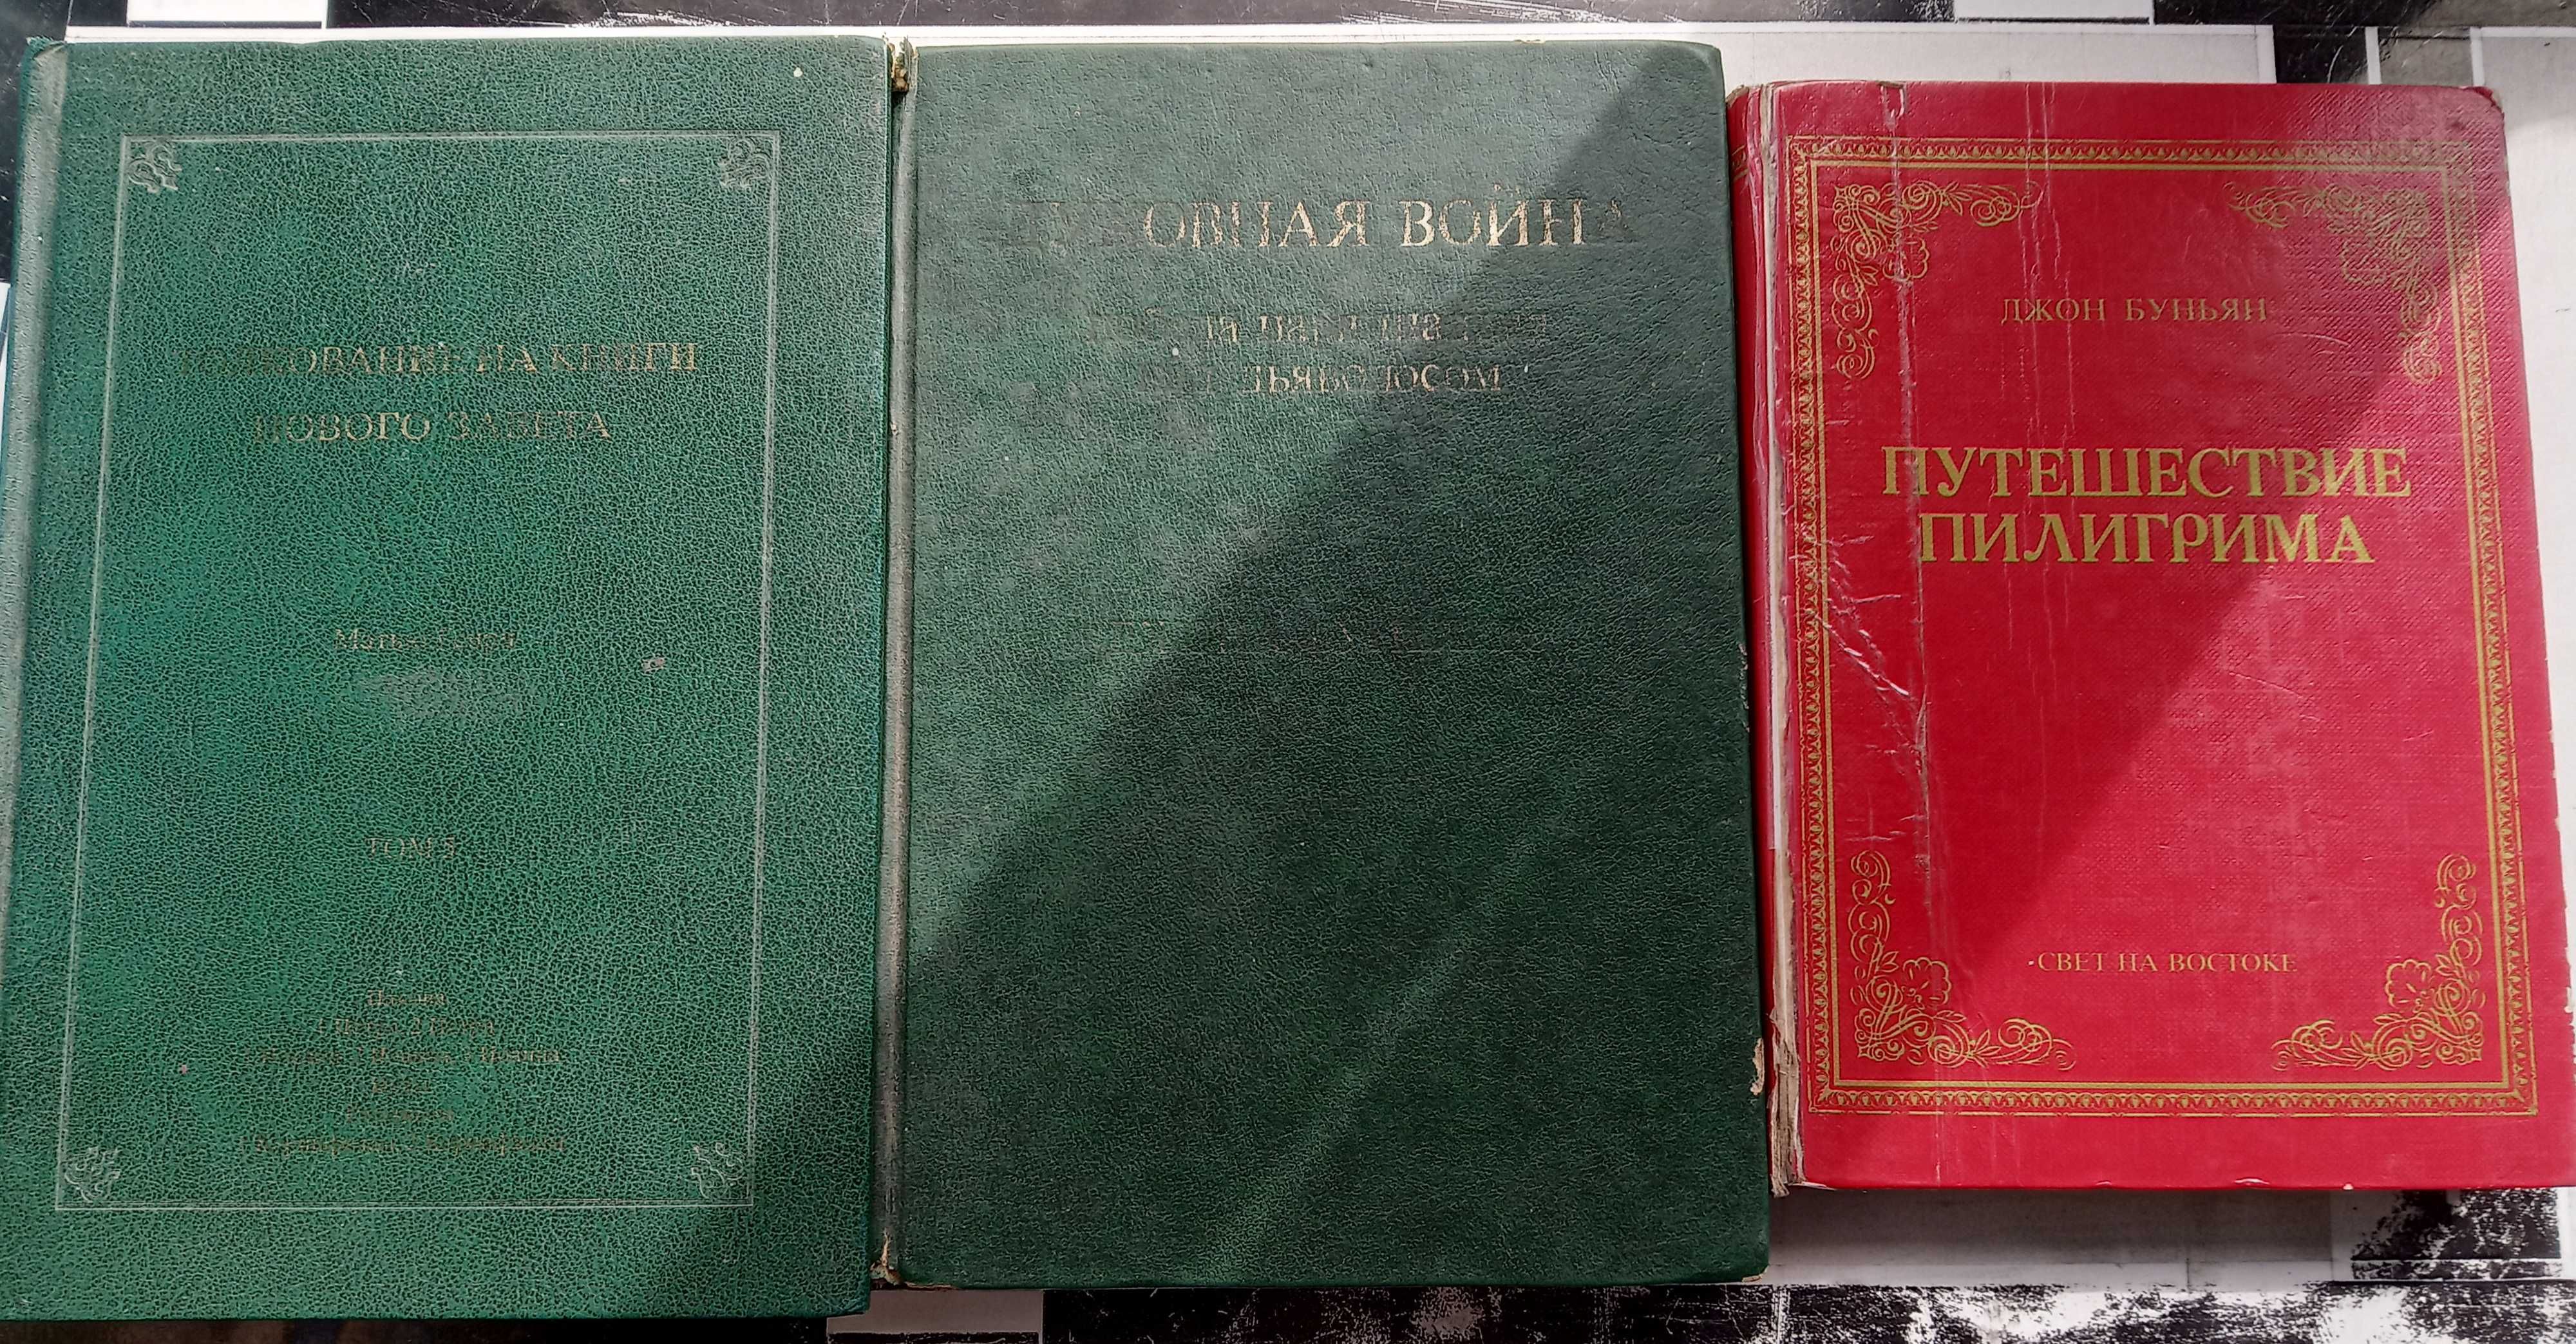 христианские книги